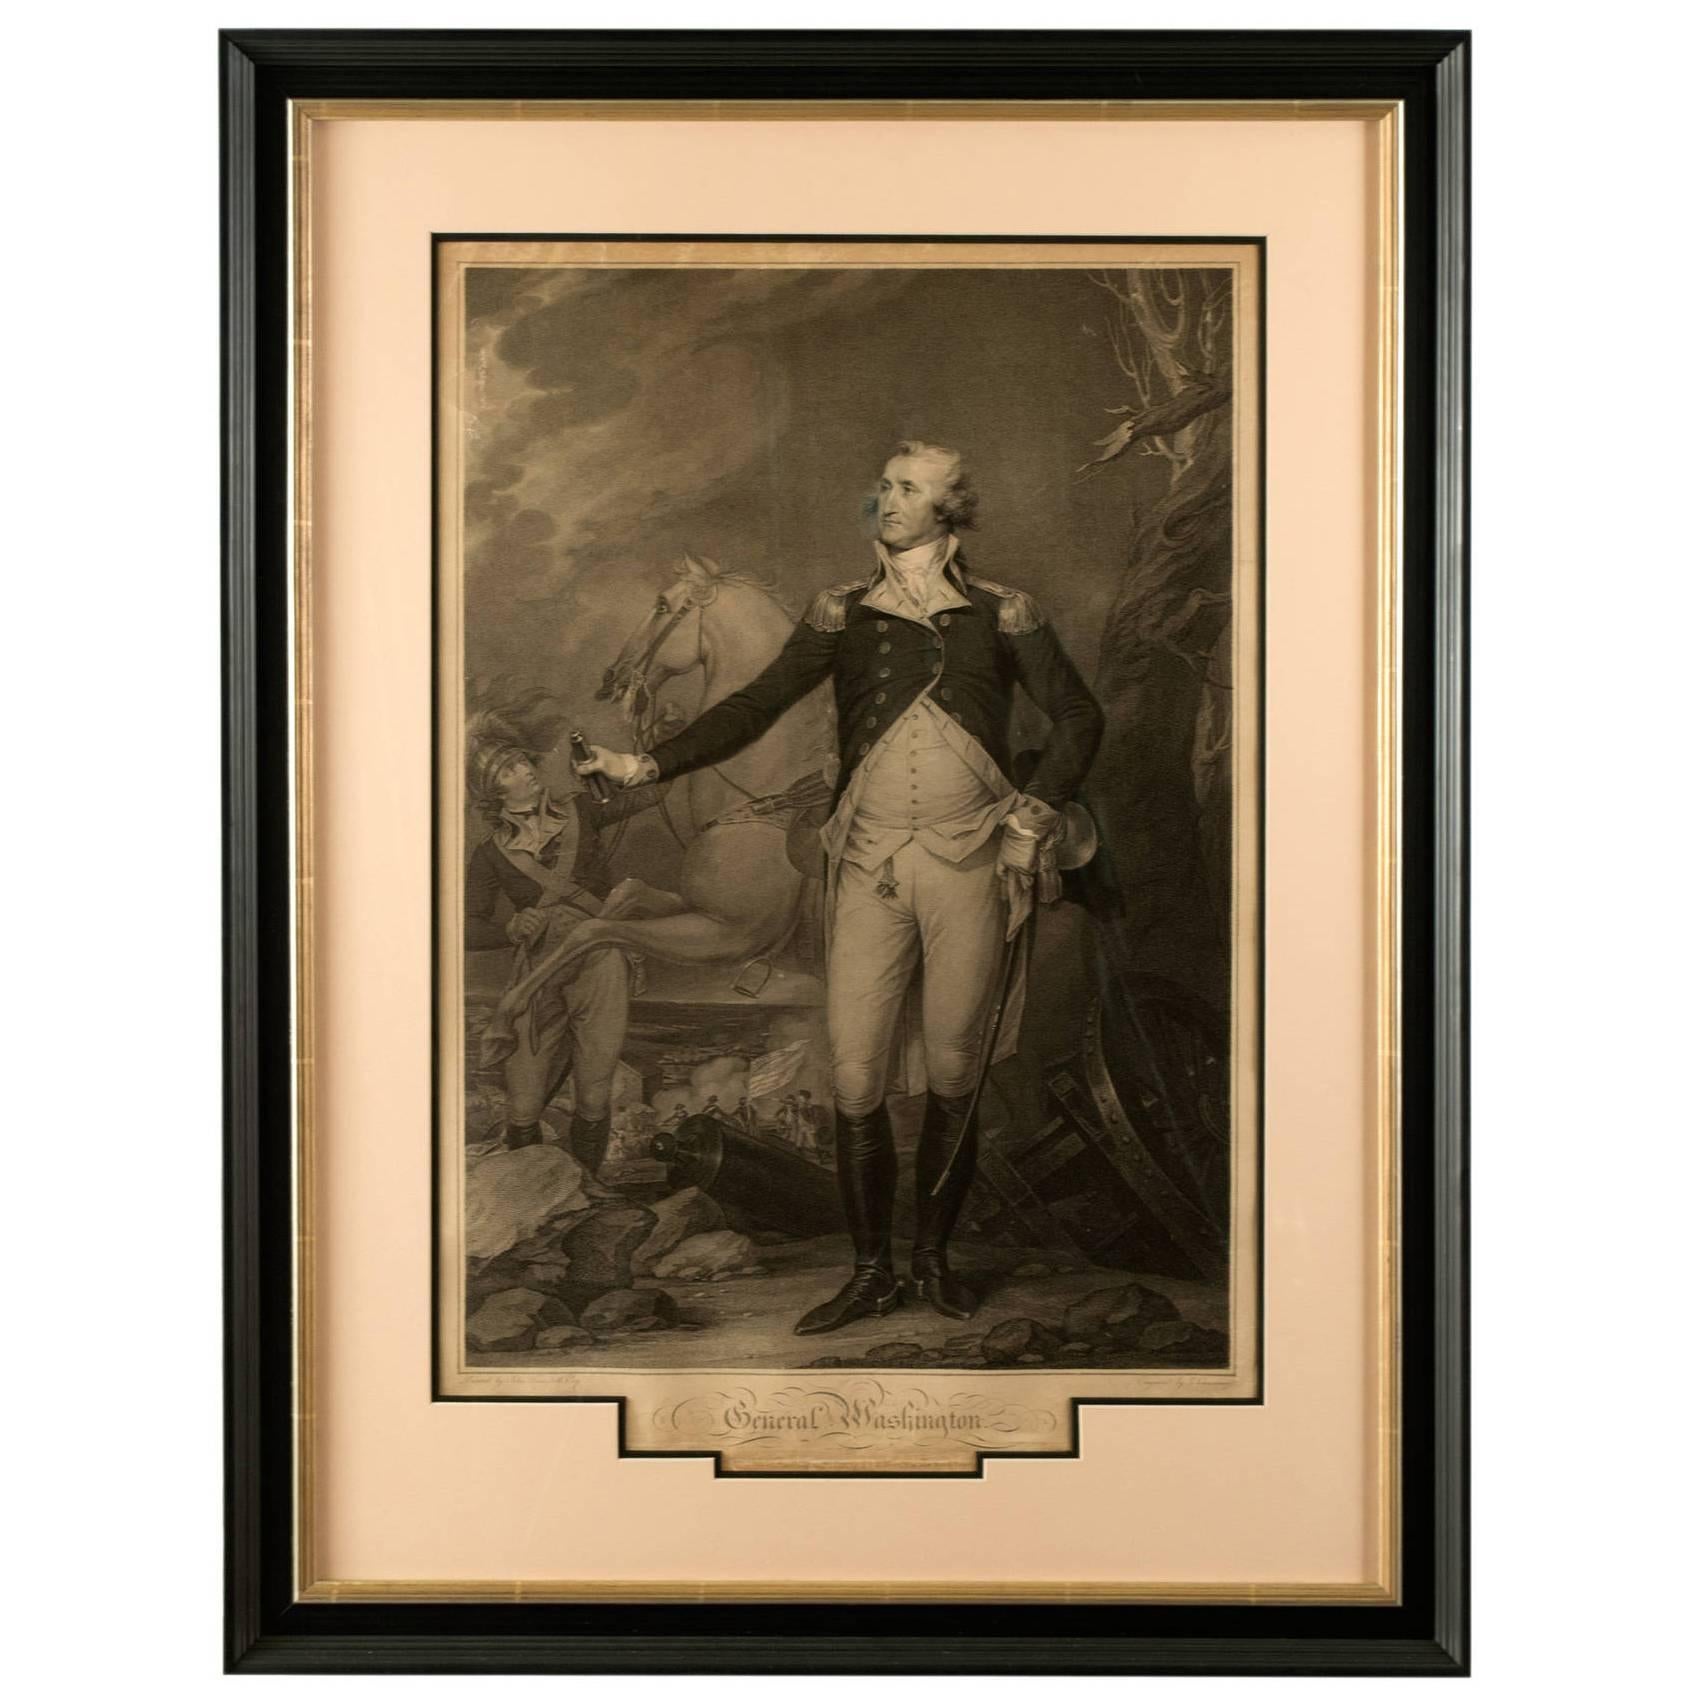 Important 18th Century Portrait of George Washington by John Trumbull